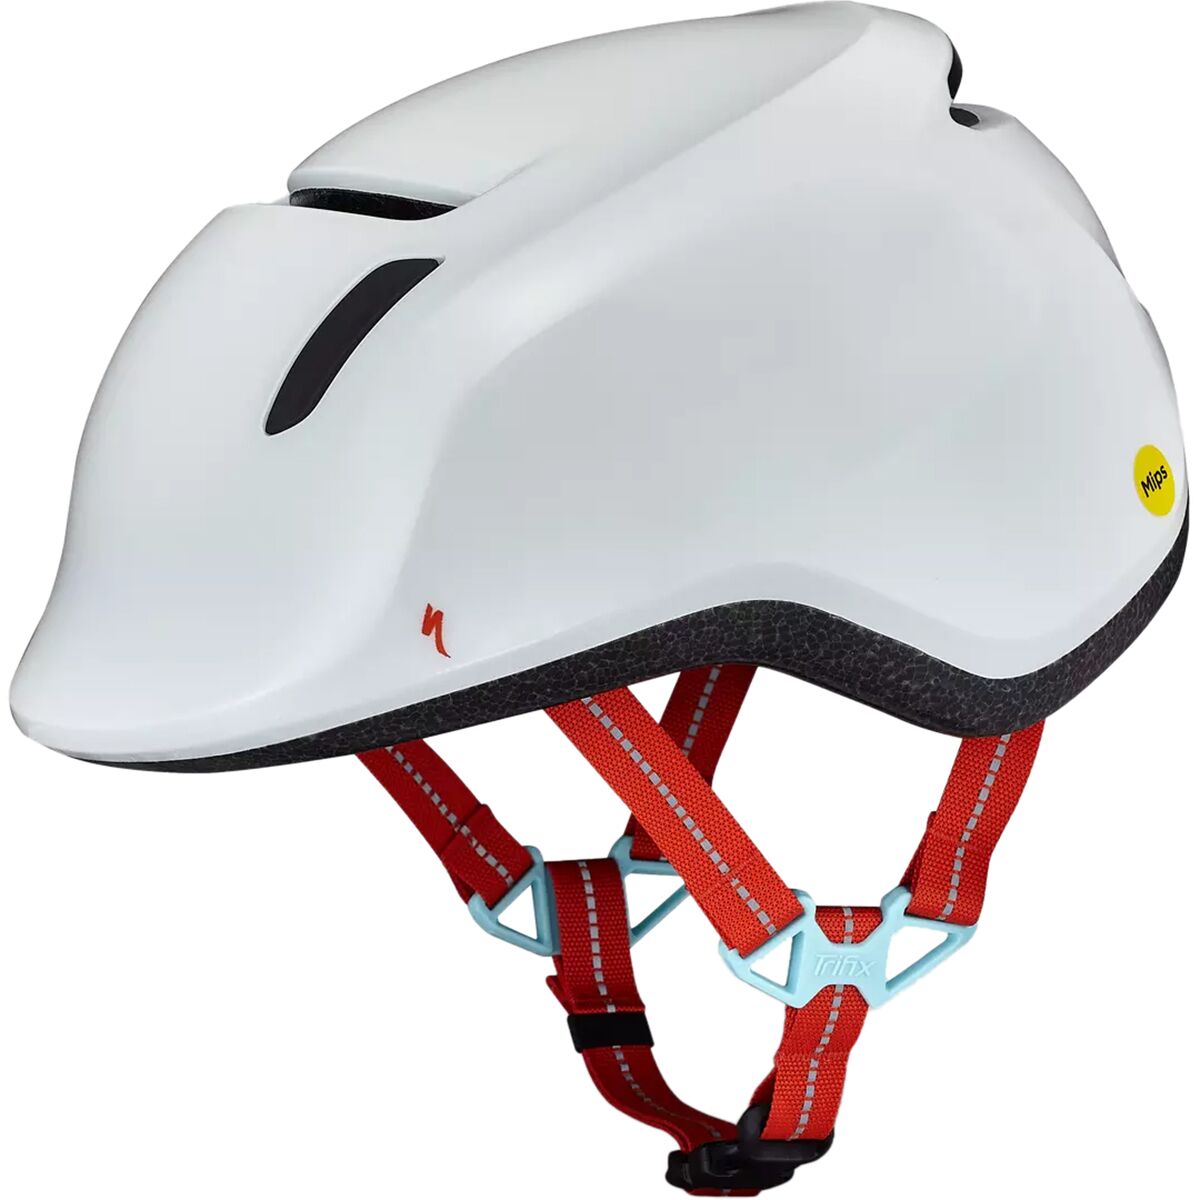 Specialized Mio 2 Mips Helmet - Kids' Dune White, One Size